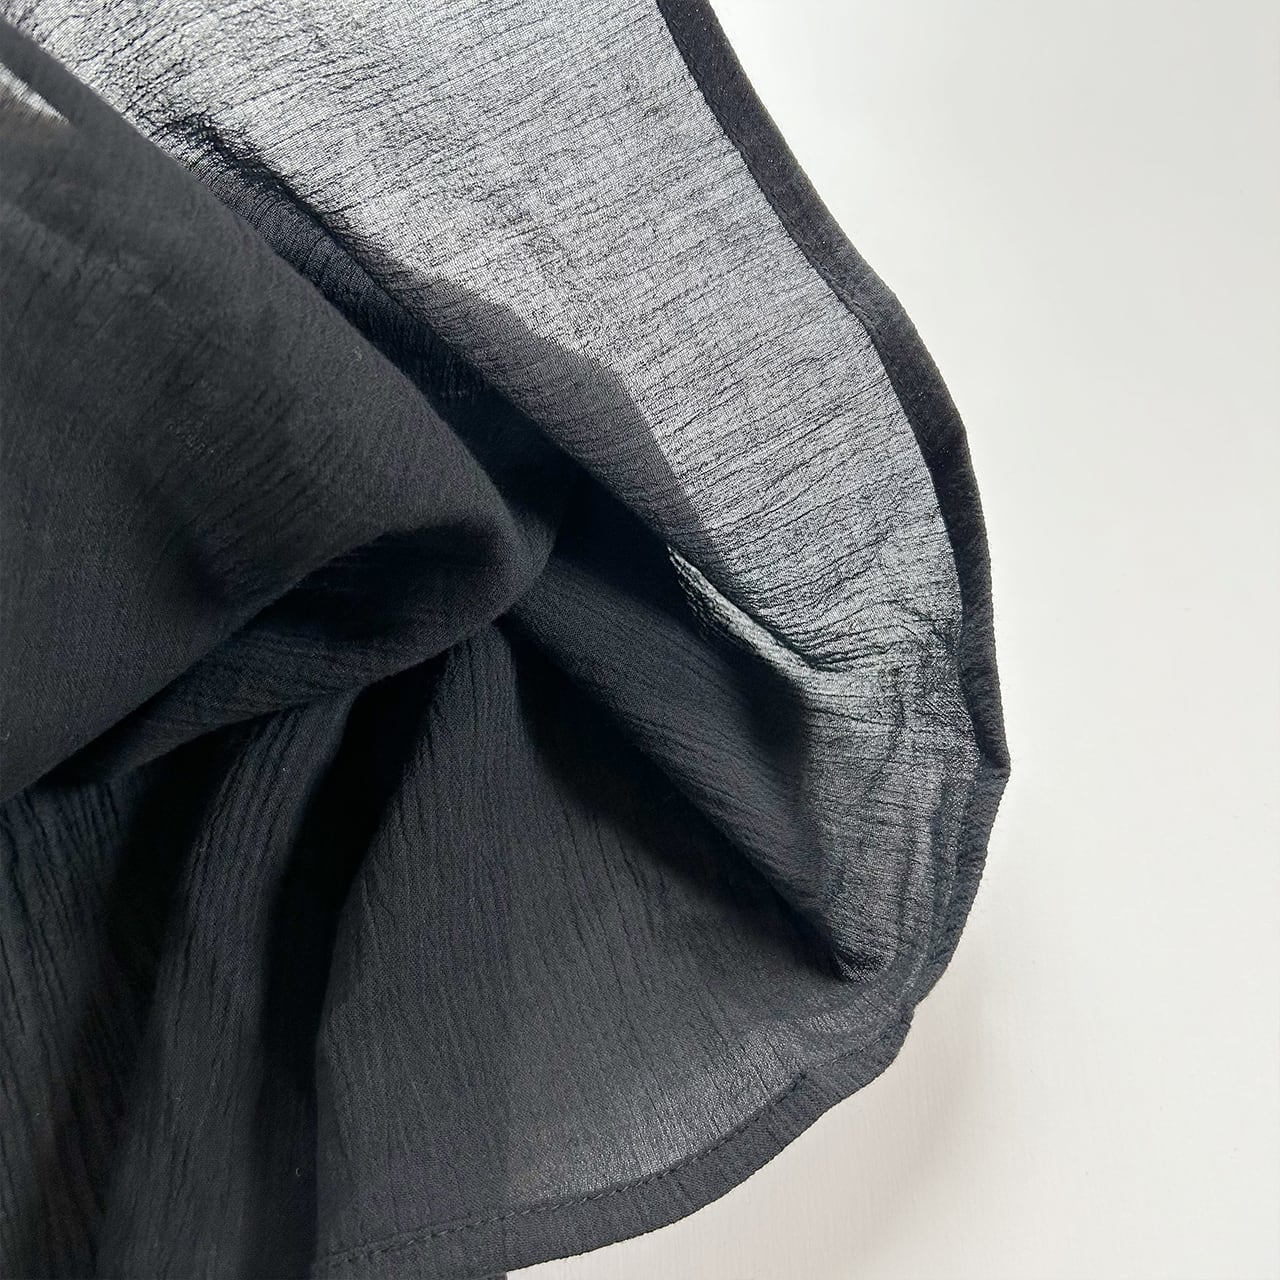 Cotton sheeting flare tee (black)